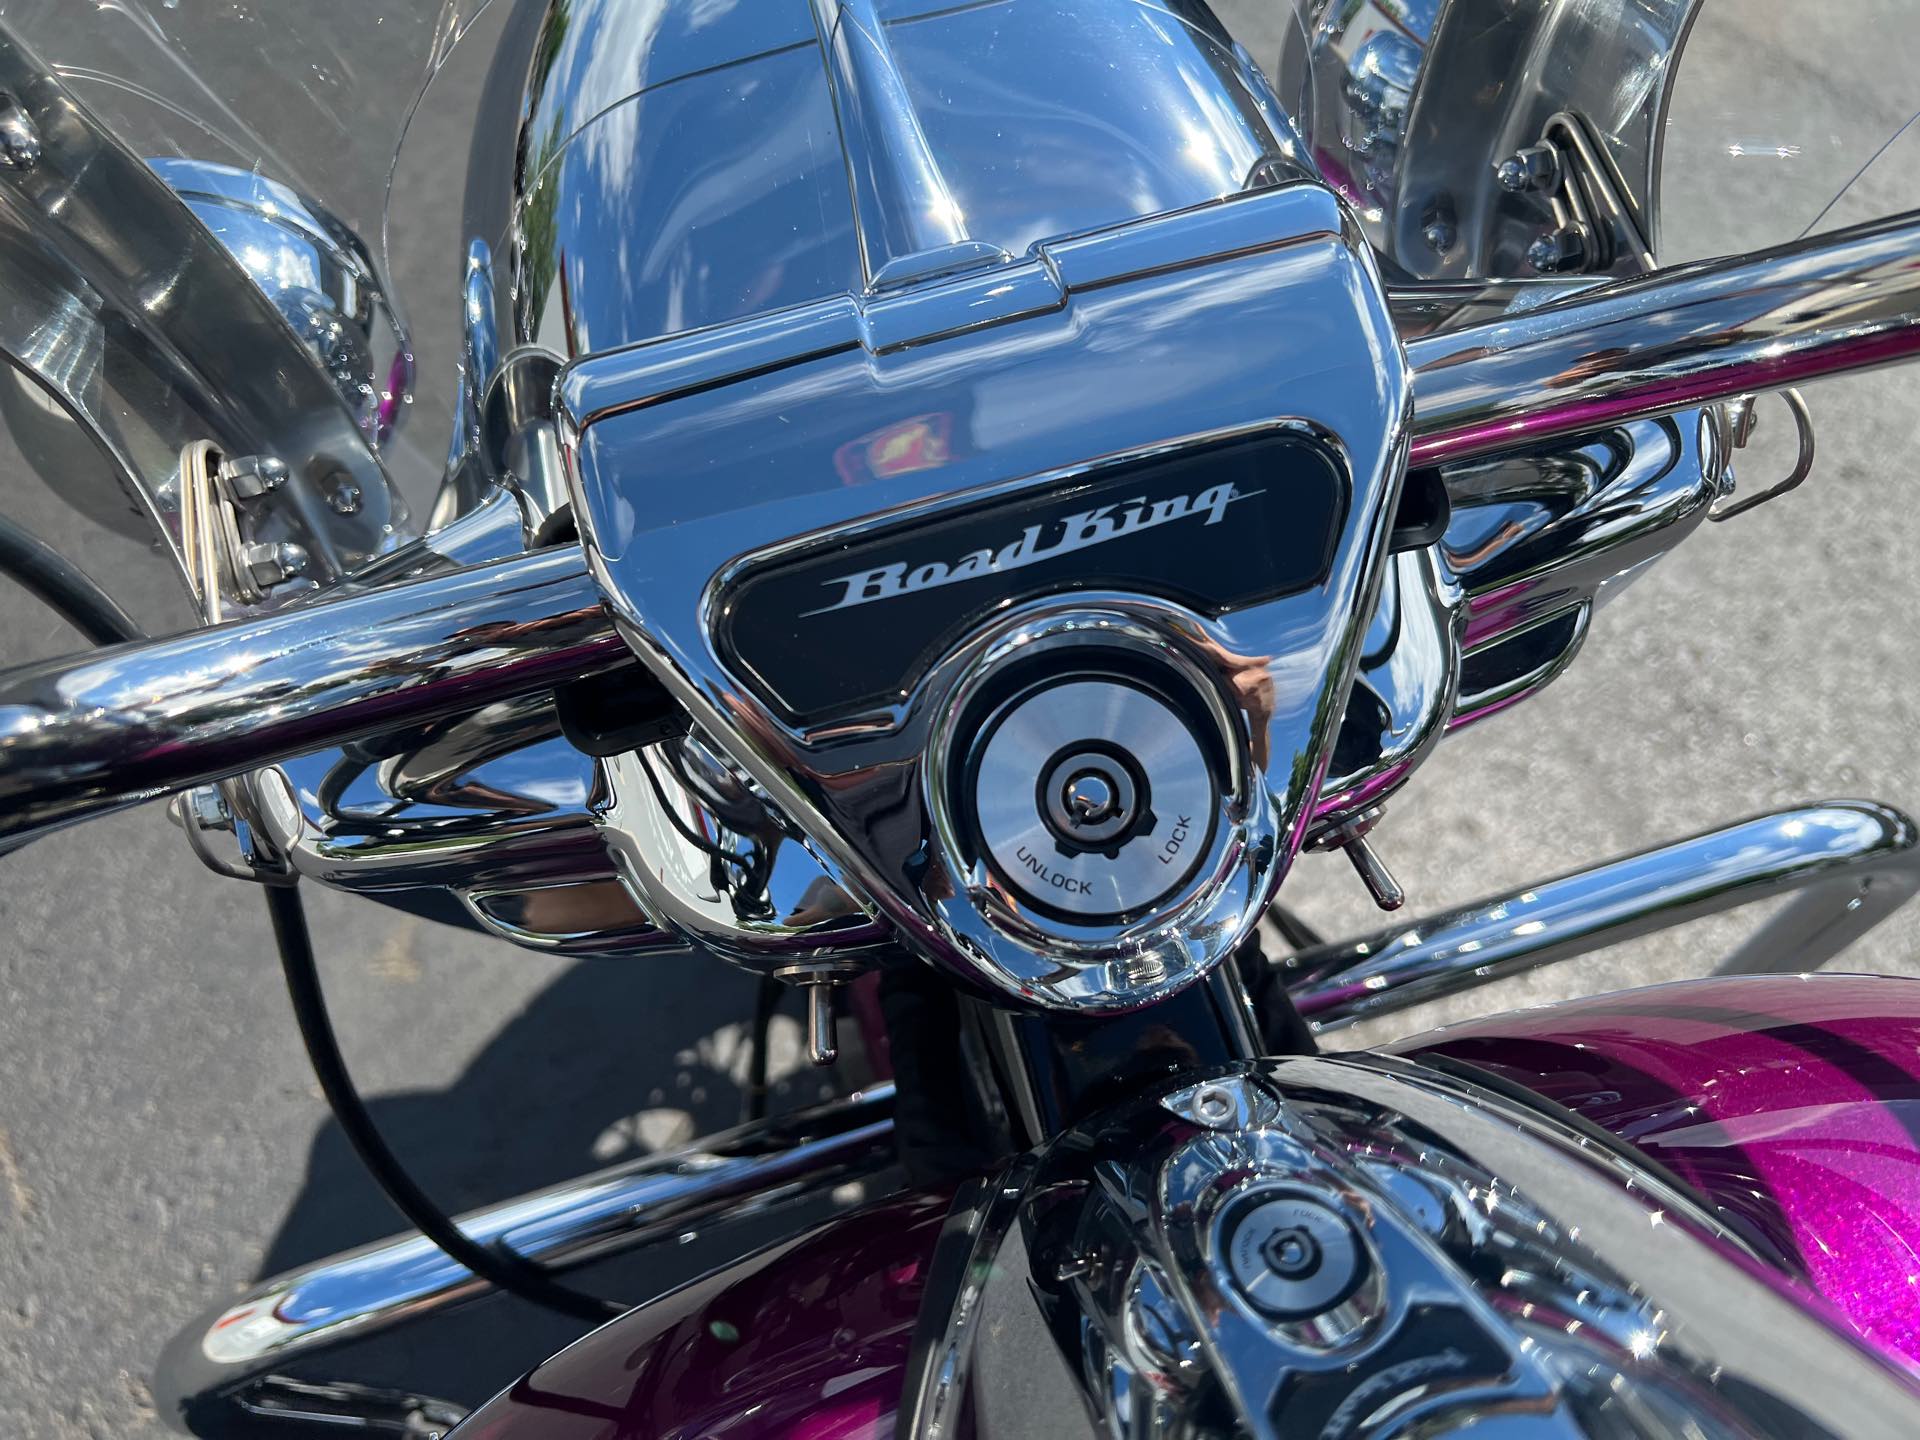 2016 Harley-Davidson Road King Base at Aces Motorcycles - Fort Collins